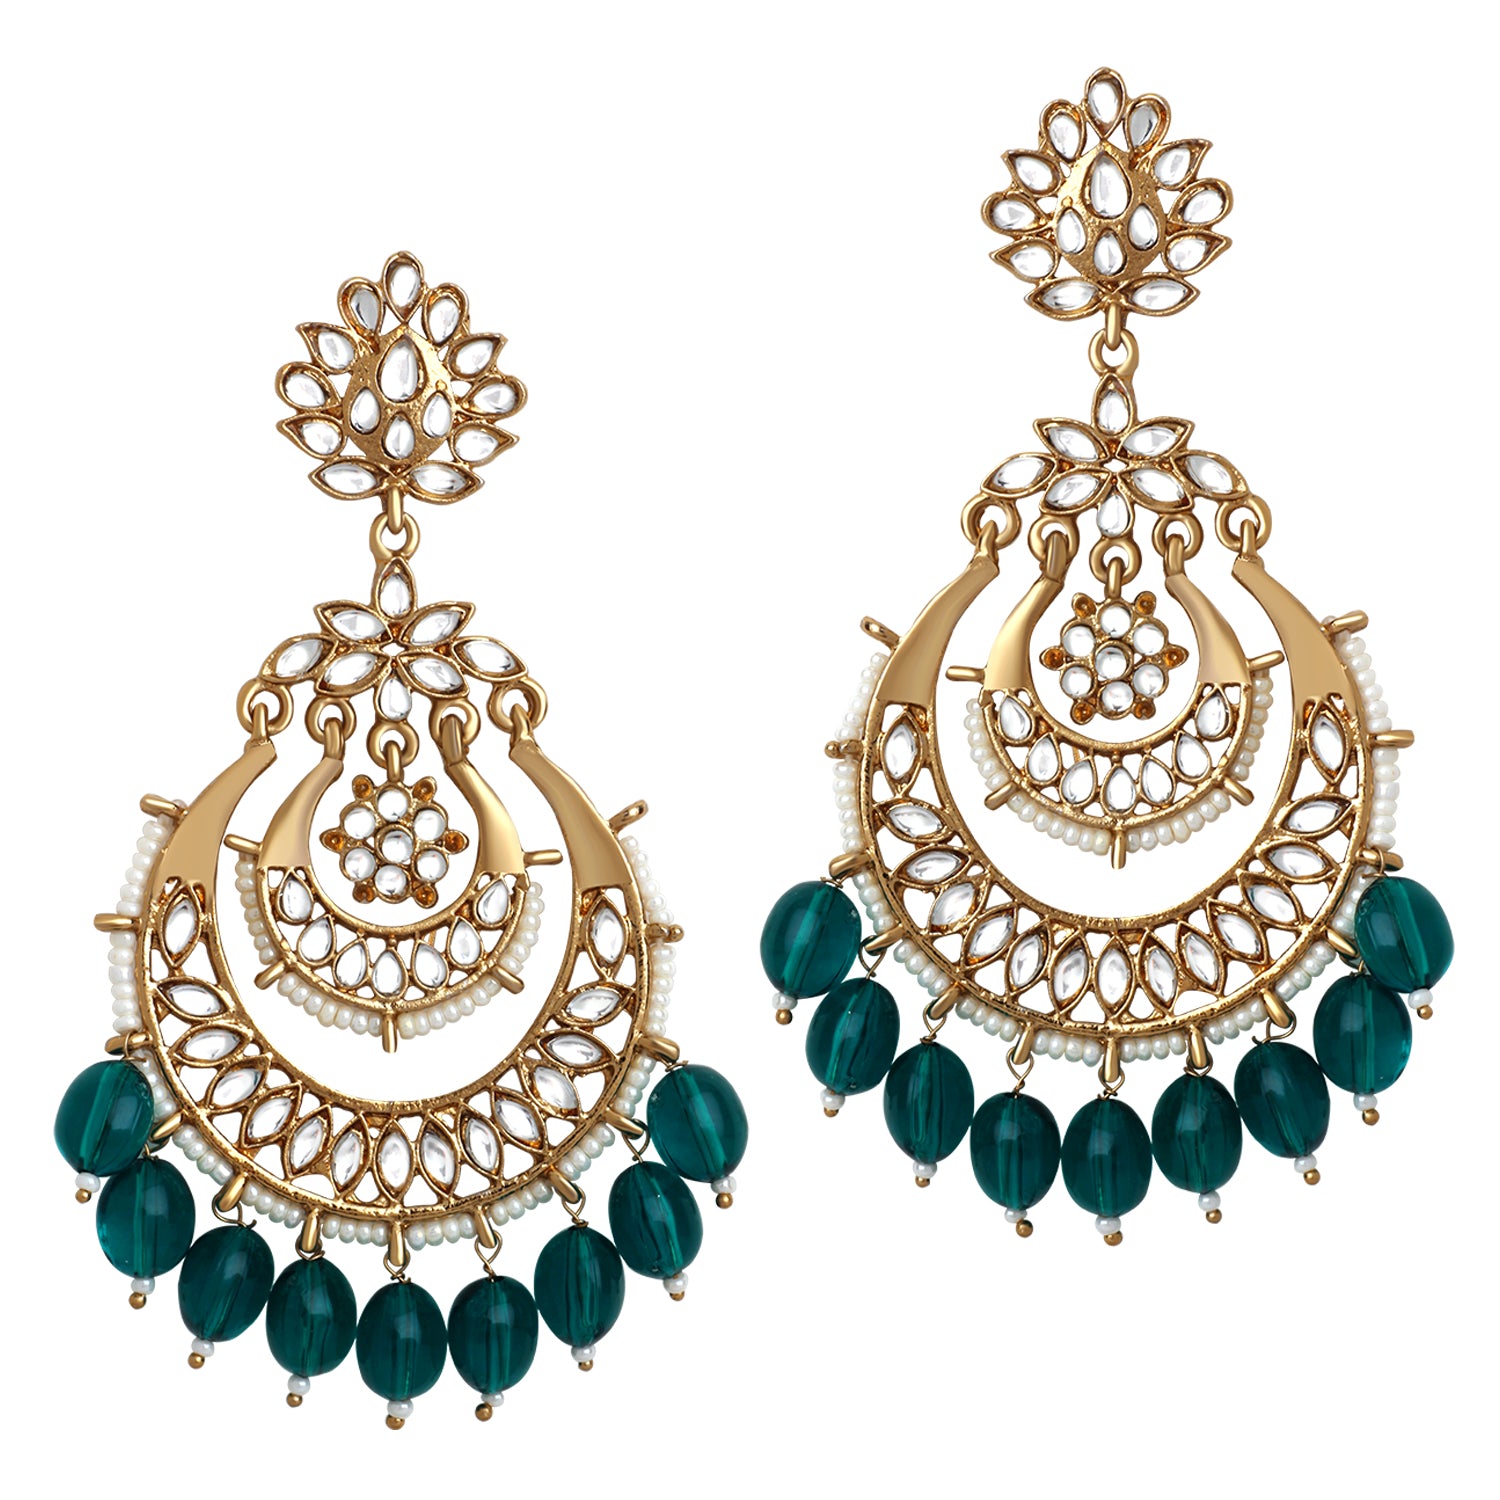 Floral Chandbali Dangler Earrings with Pearls